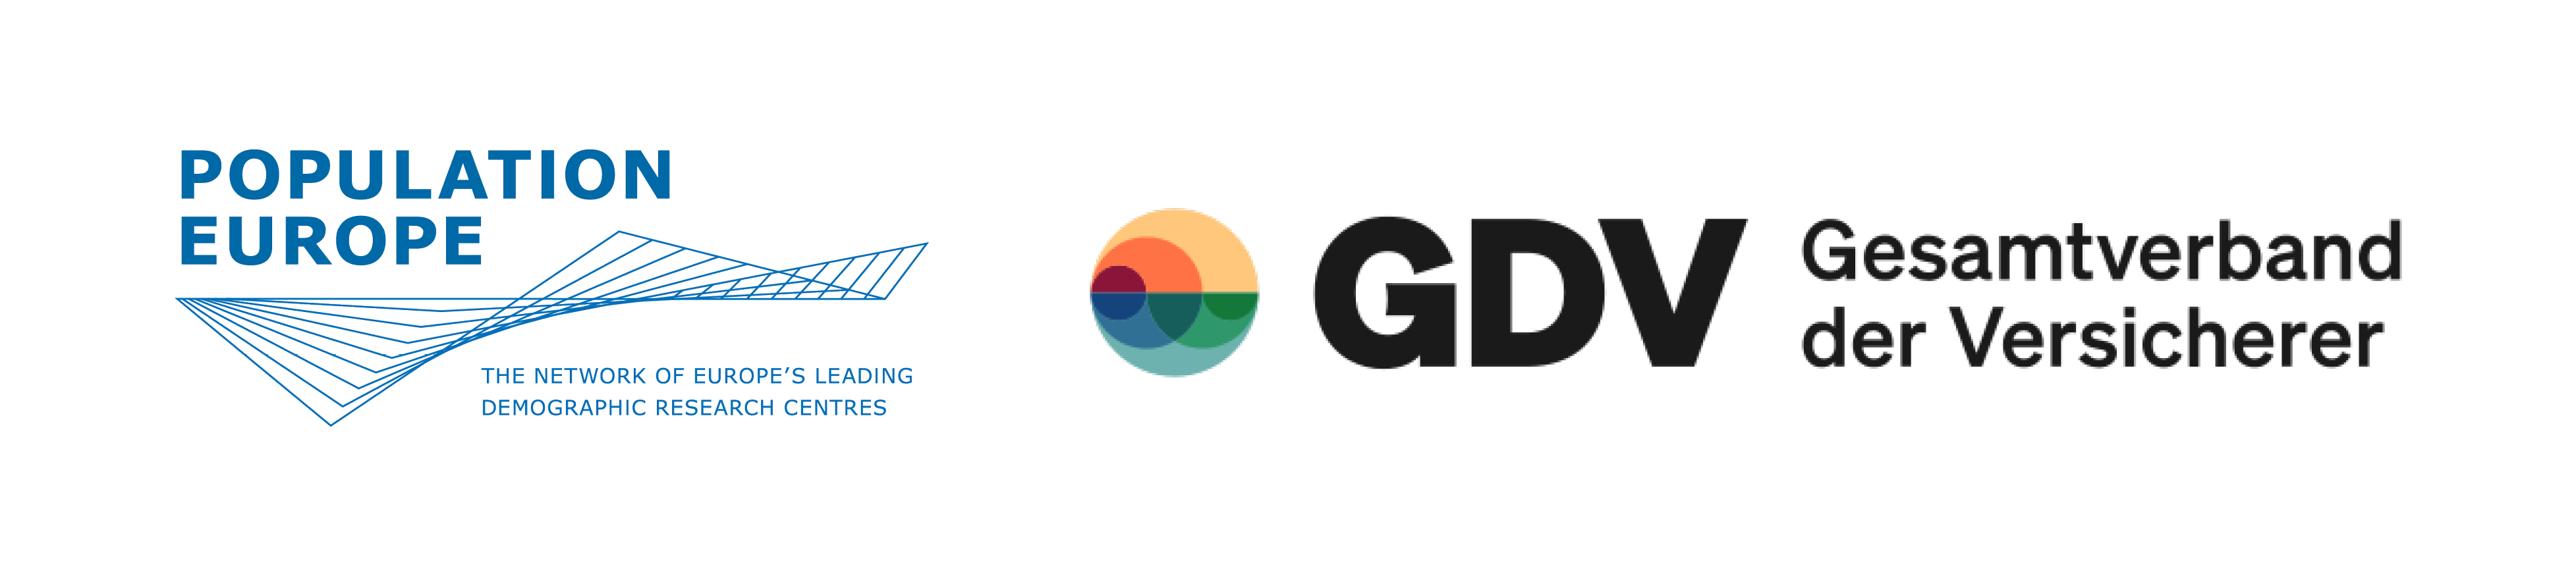 Population Europe and GDV logos